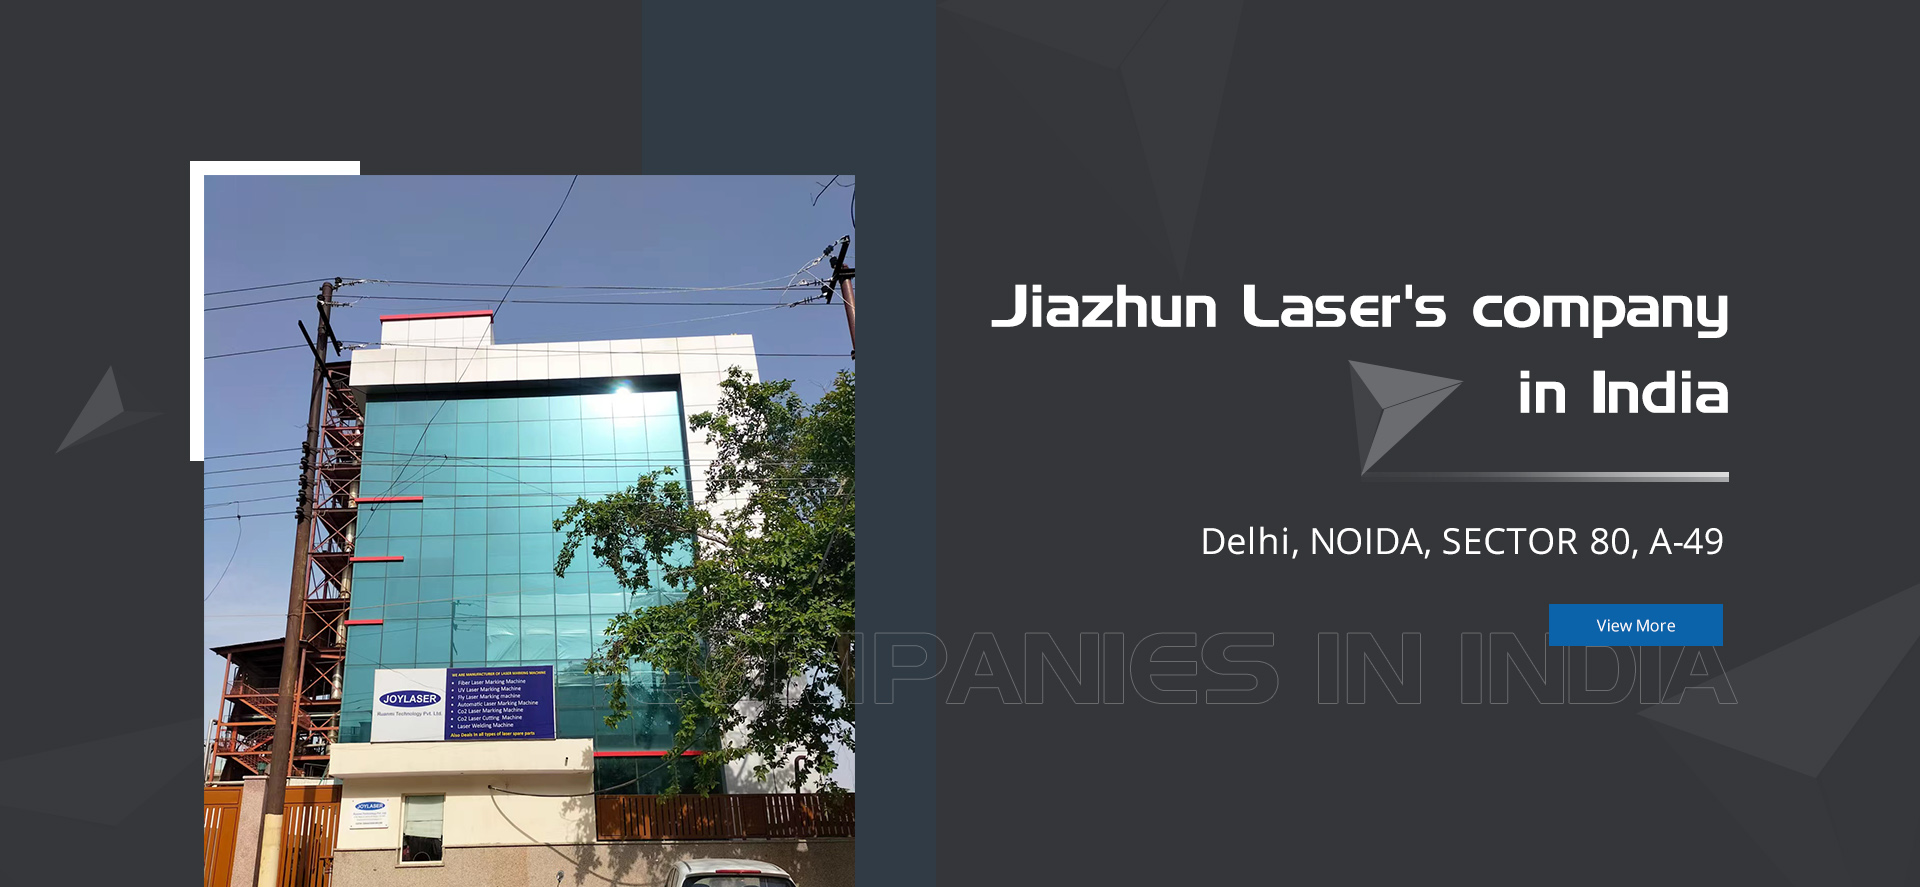 Jiazhun Laser's company in Indian